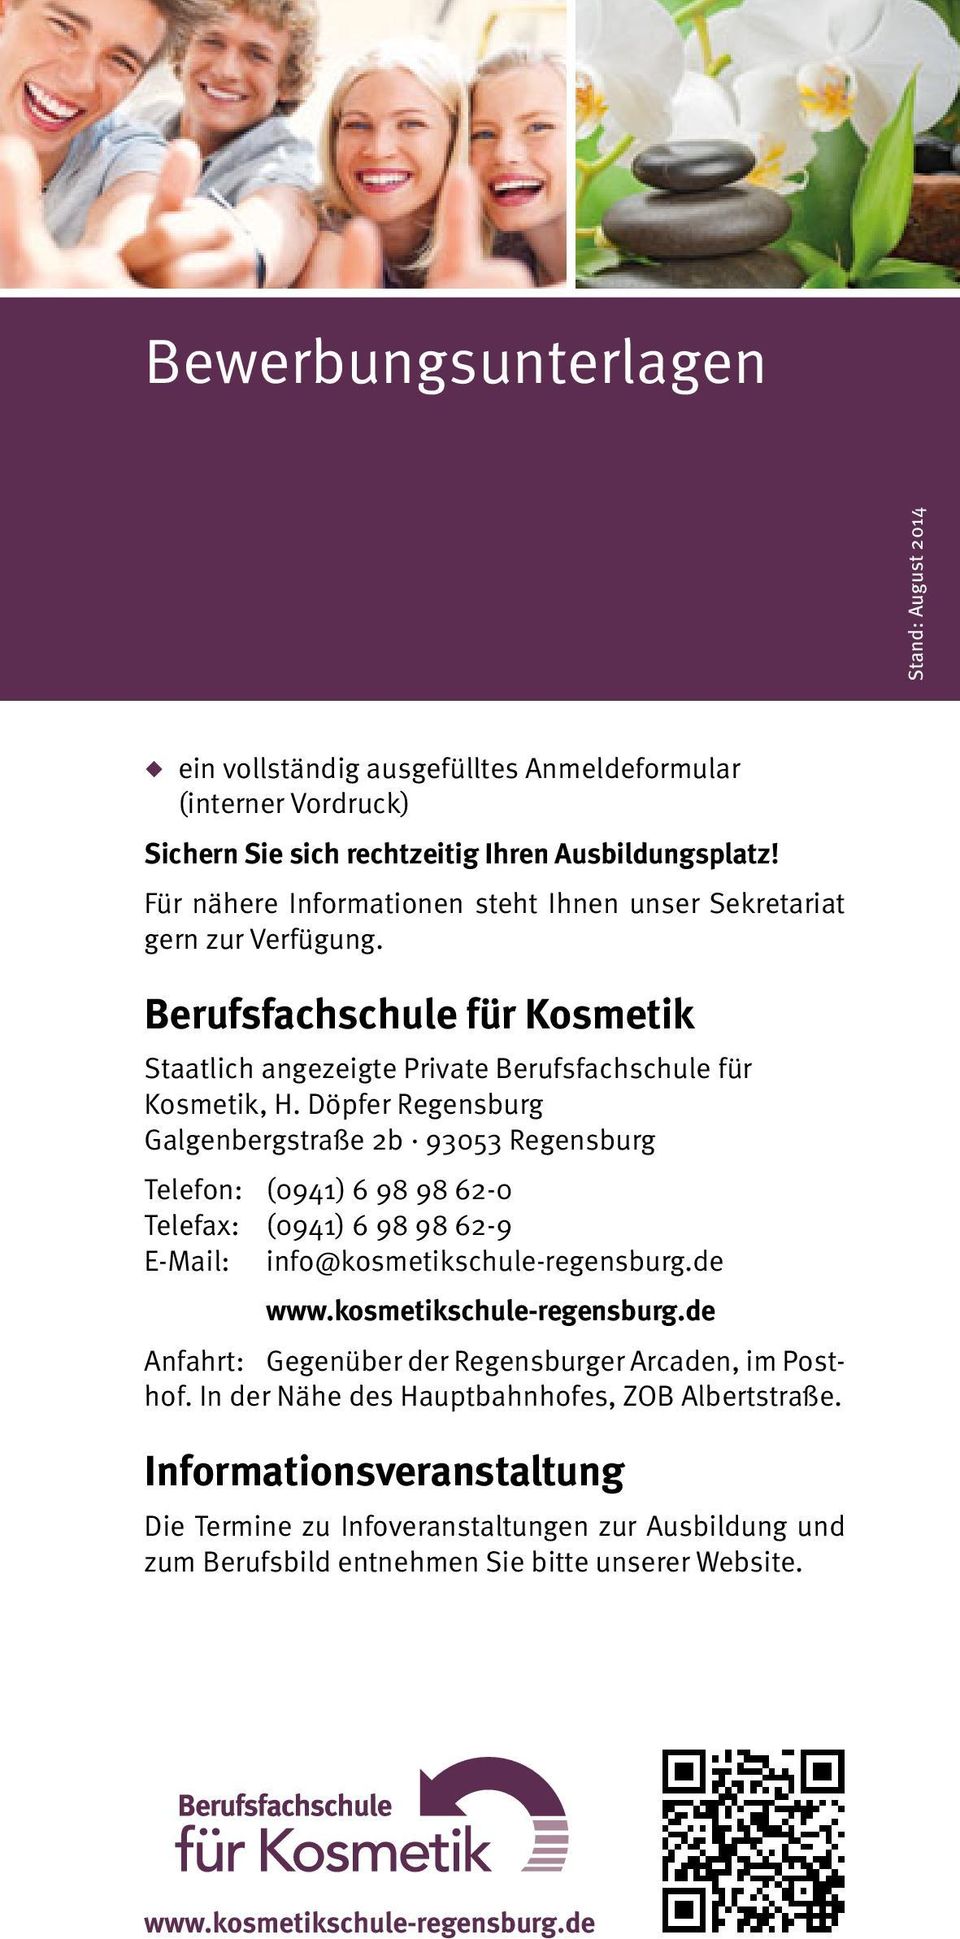 Döpfer Regensburg Galgenbergstraße 2b 93053 Regensburg Telefon: (0941) 6 98 98 62-0 Telefax: (0941) 6 98 98 62-9 E-Mail: info@kosmetikschule-regensburg.